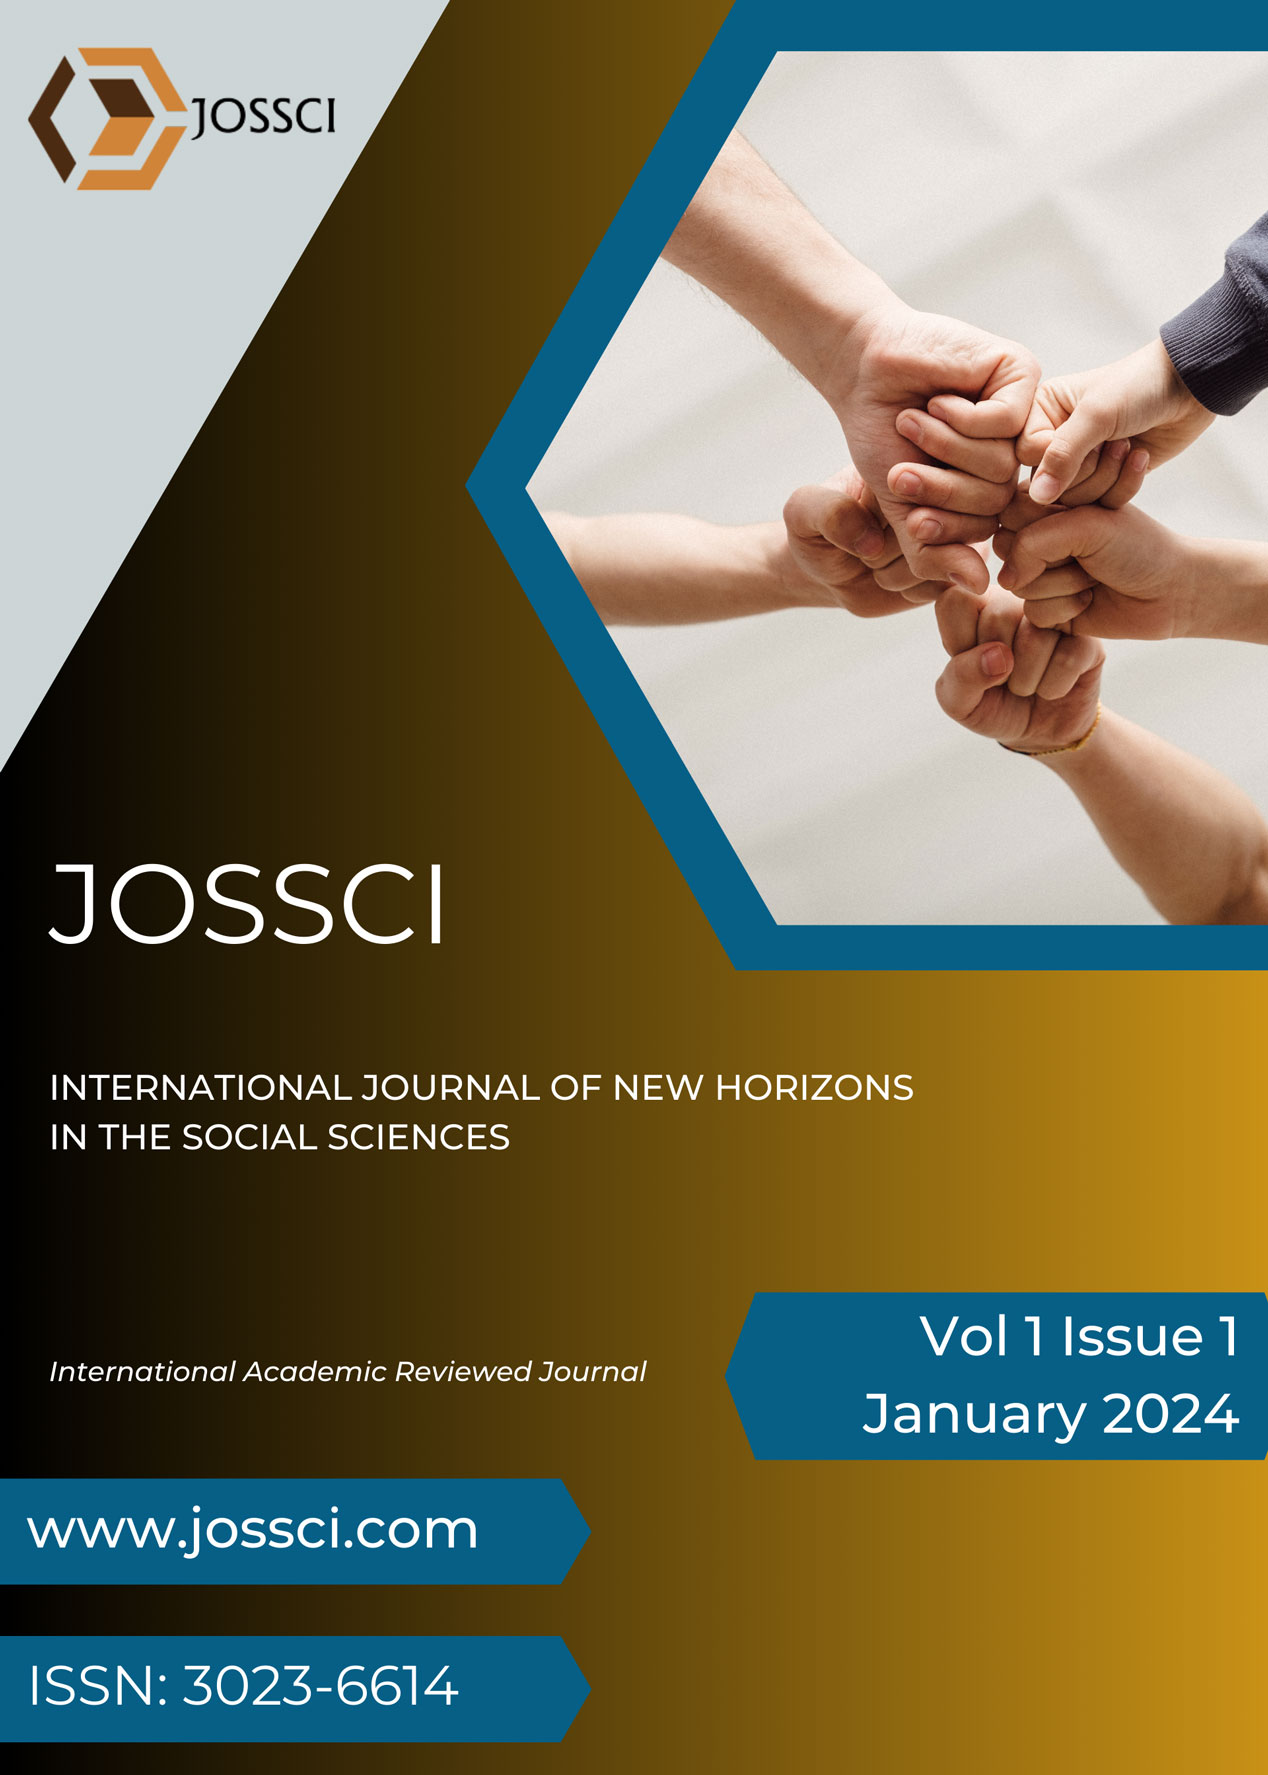 Joosci Volume 1 Issue 1 (January 2024)